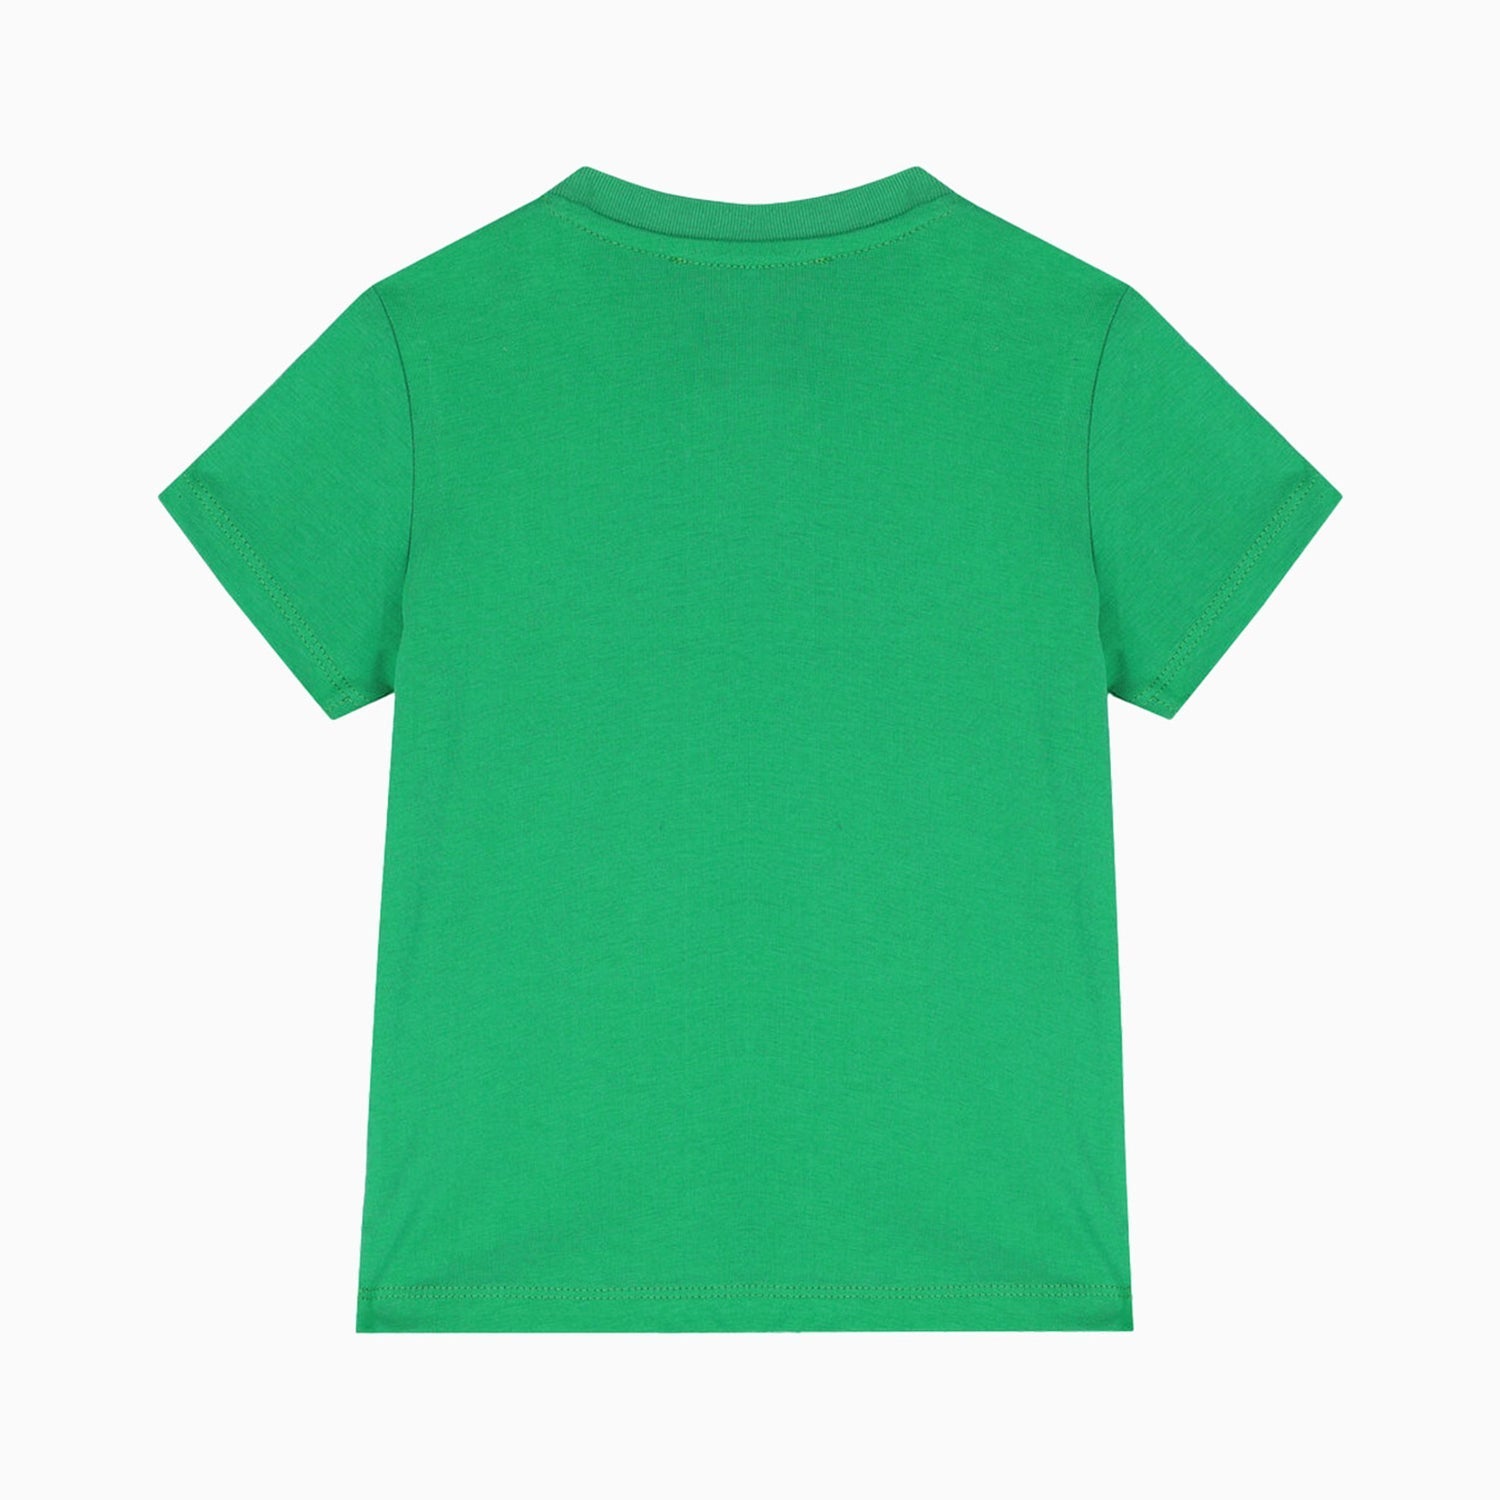 Kenzo Kid's Elephant Short Sleeves T Shirt - Color: Green - Kids Premium Clothing -